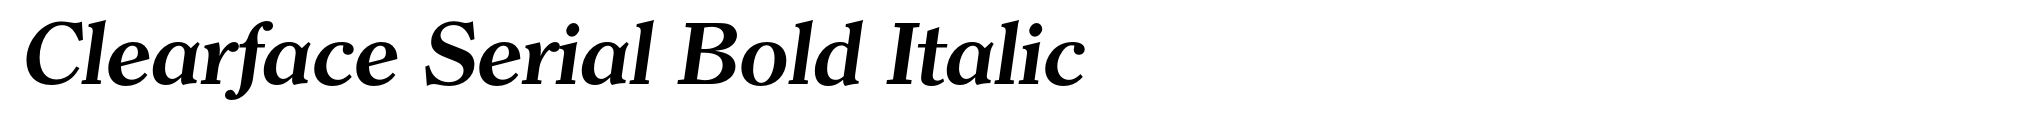 Clearface Serial Bold Italic image